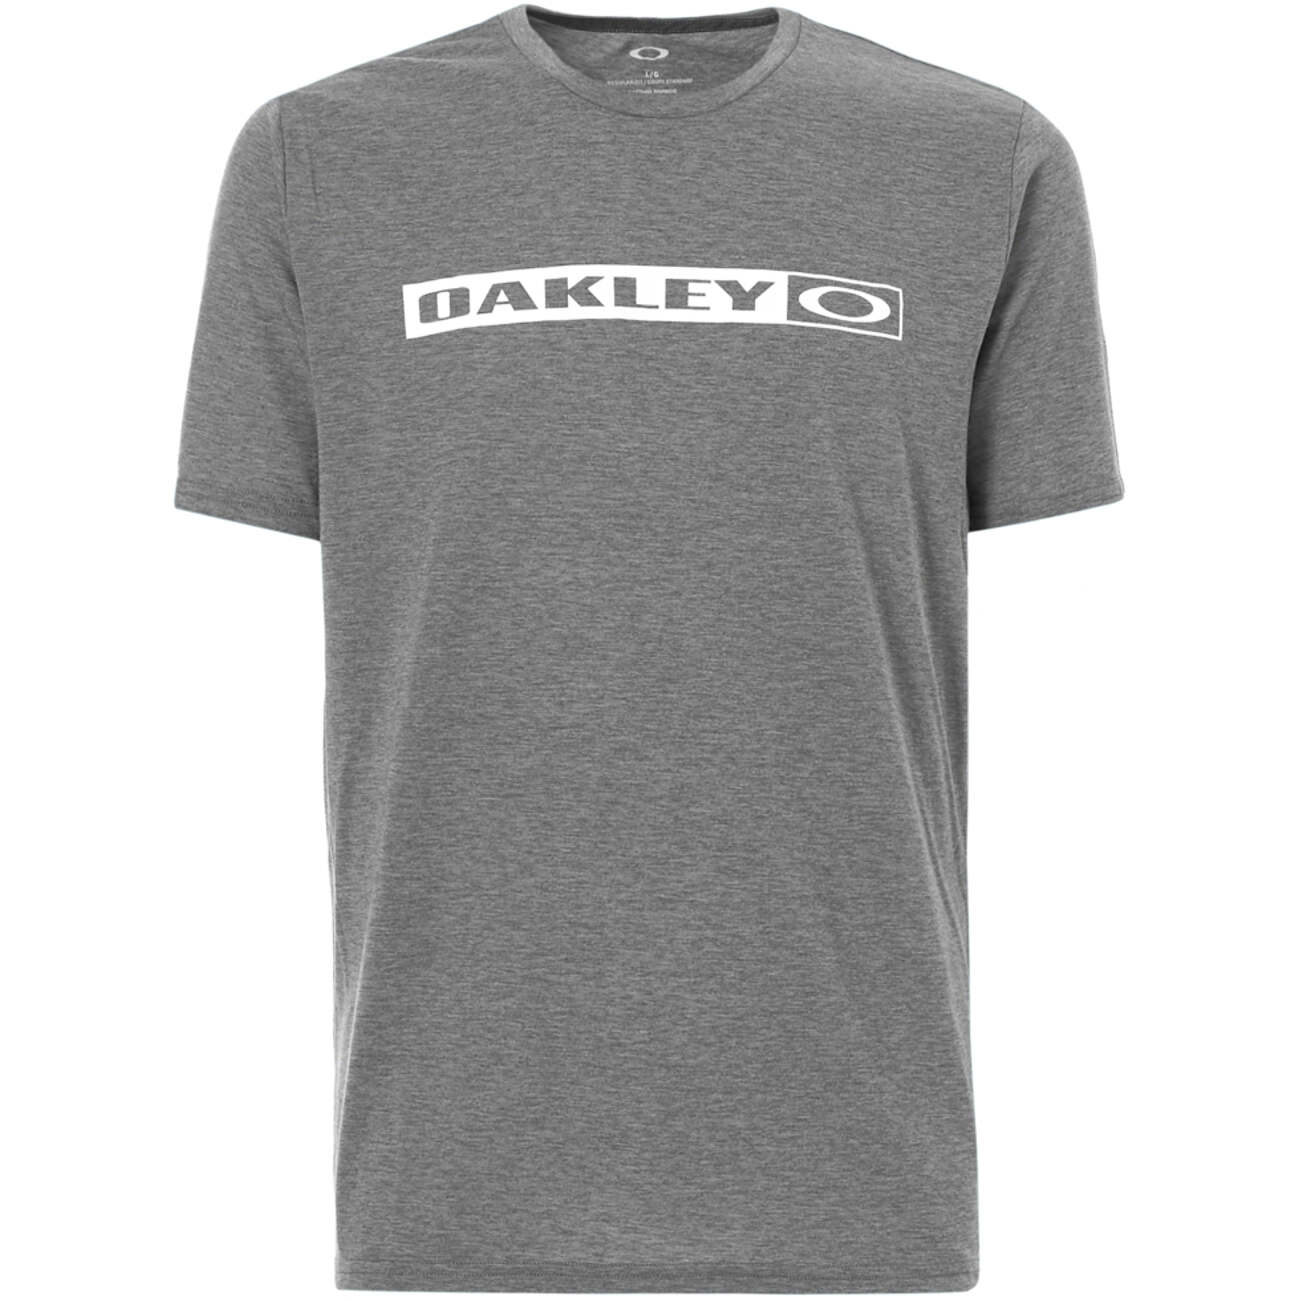 Oakley T-Shirt New Original Athletic Heather Grey